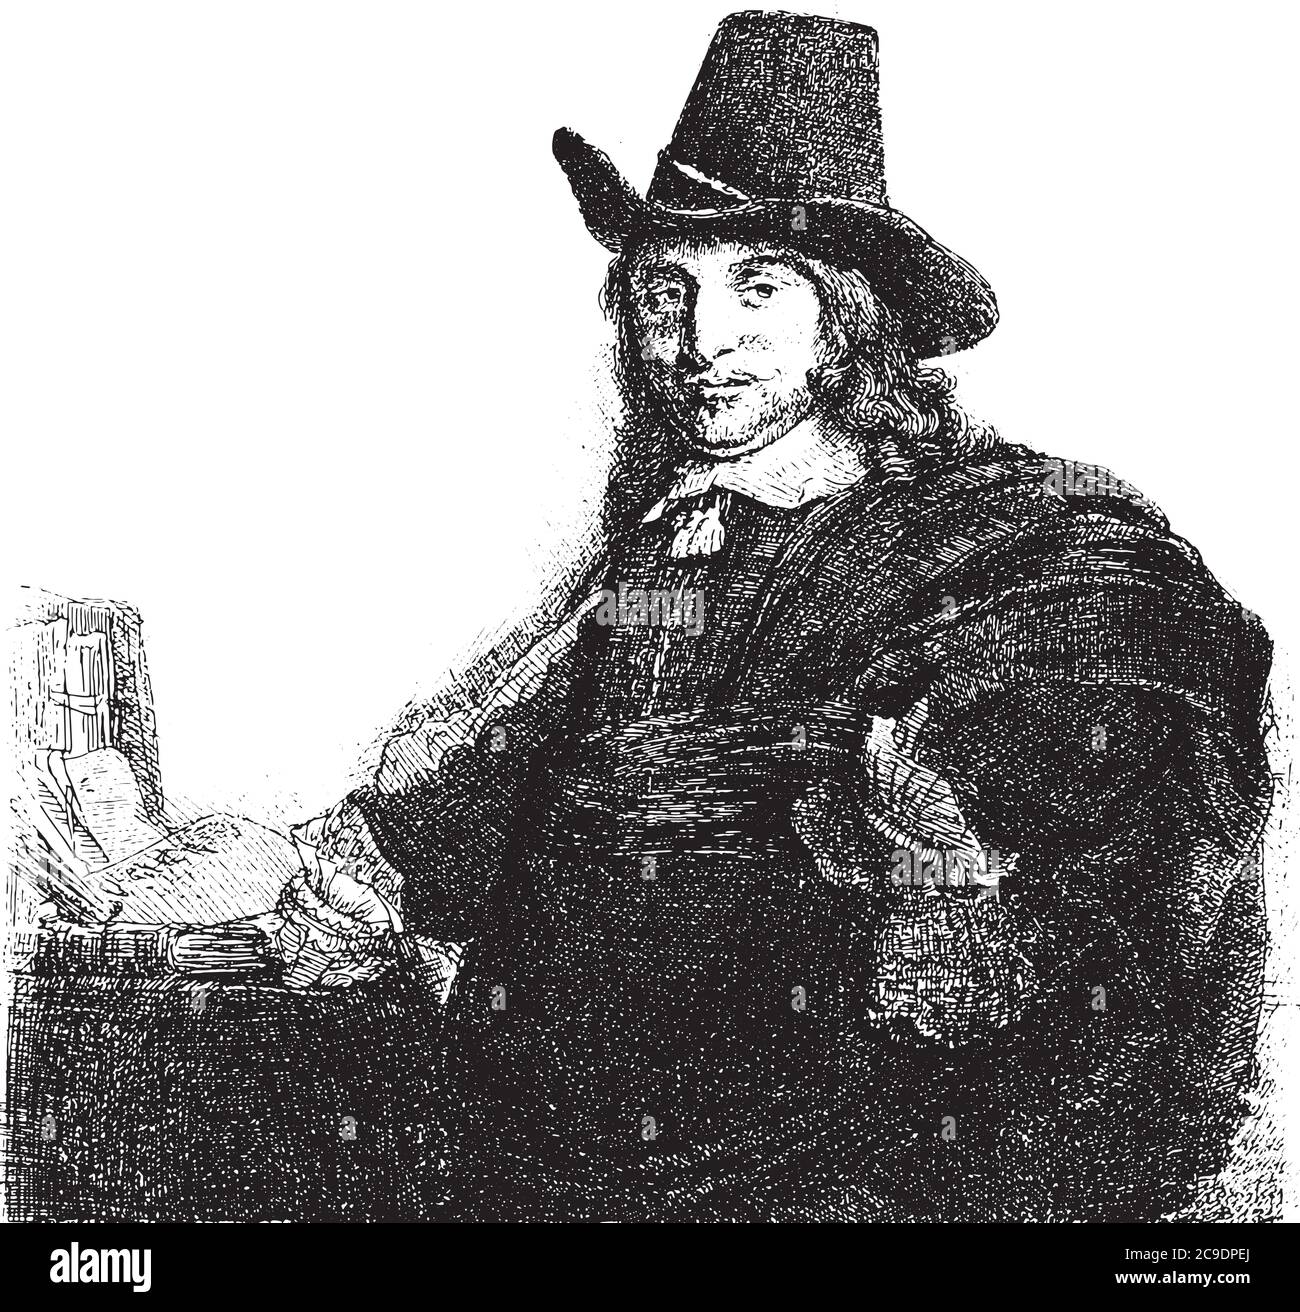 Porträt des Malers Jan Asselijn, Rembrandt van Rijn, 1807 - 1808, Vintage-Gravur. Stock Vektor